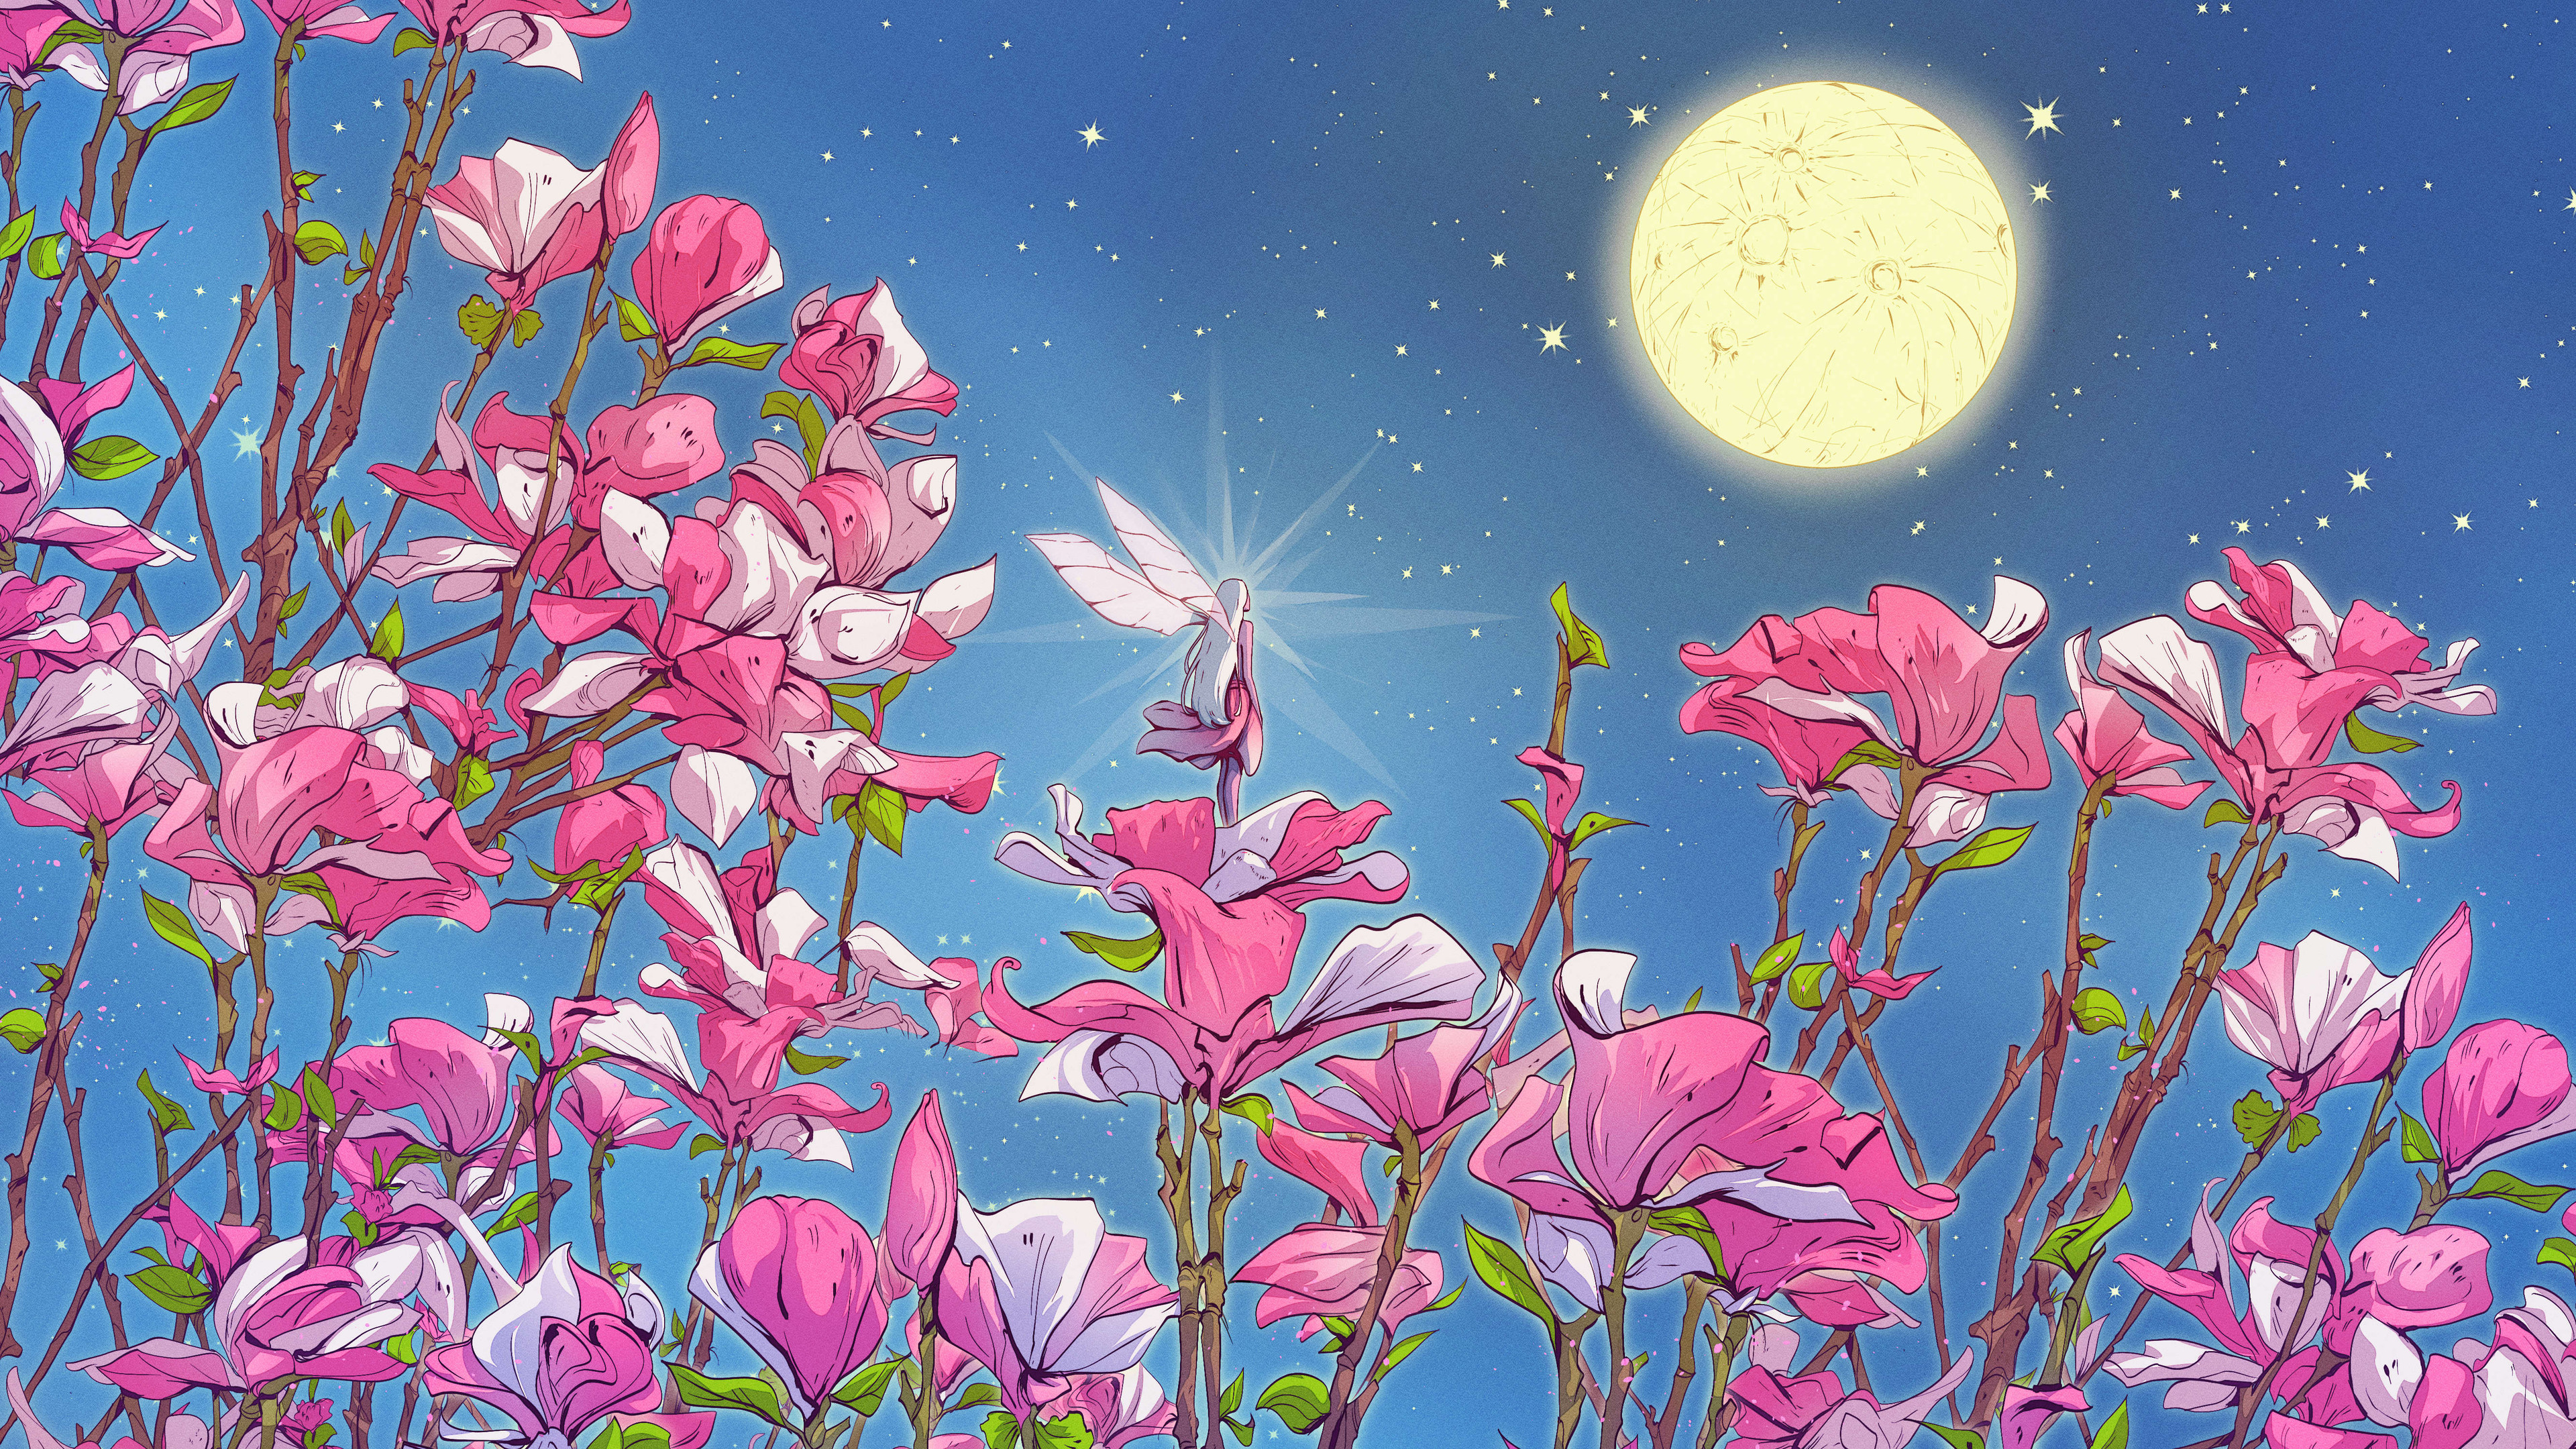 Christian Benavides Digital Art Fantasy Art Flowers Night Sky Fairies Moon Stars Magnolia 3840x2160